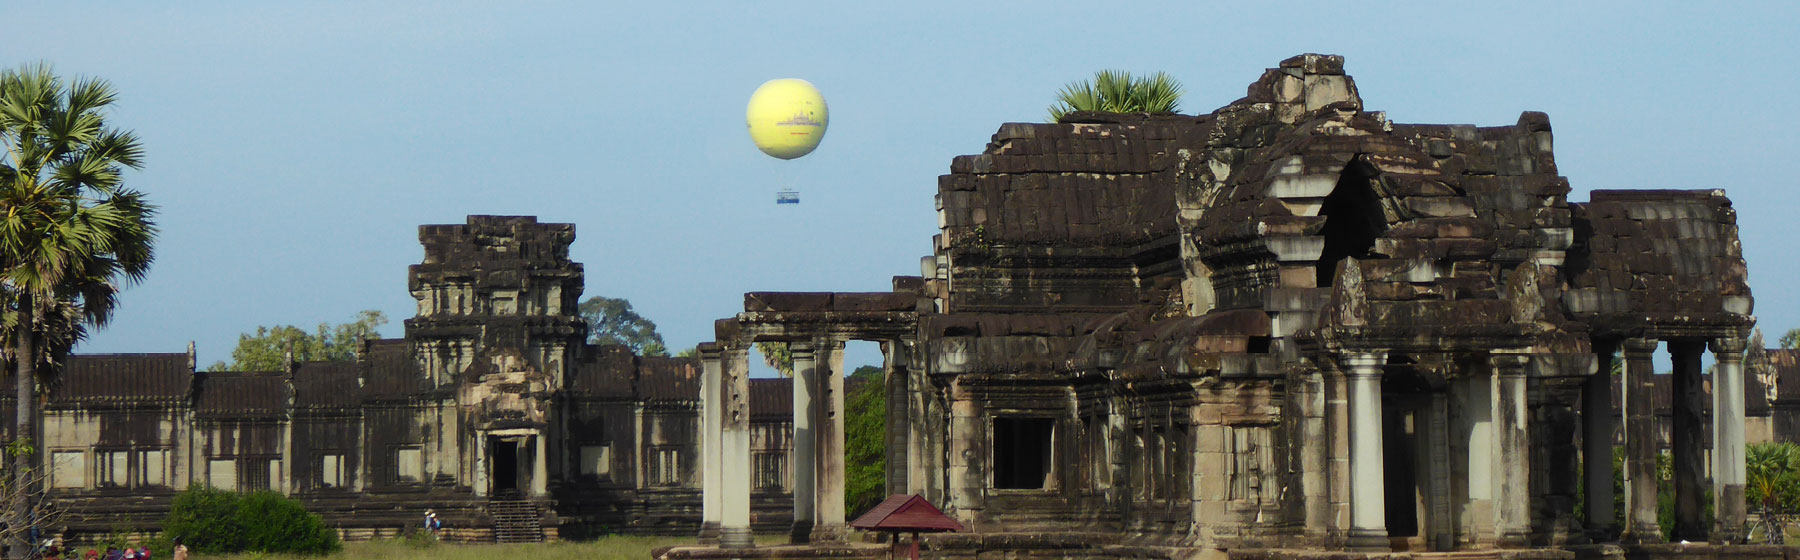 Balloons in Cambodia